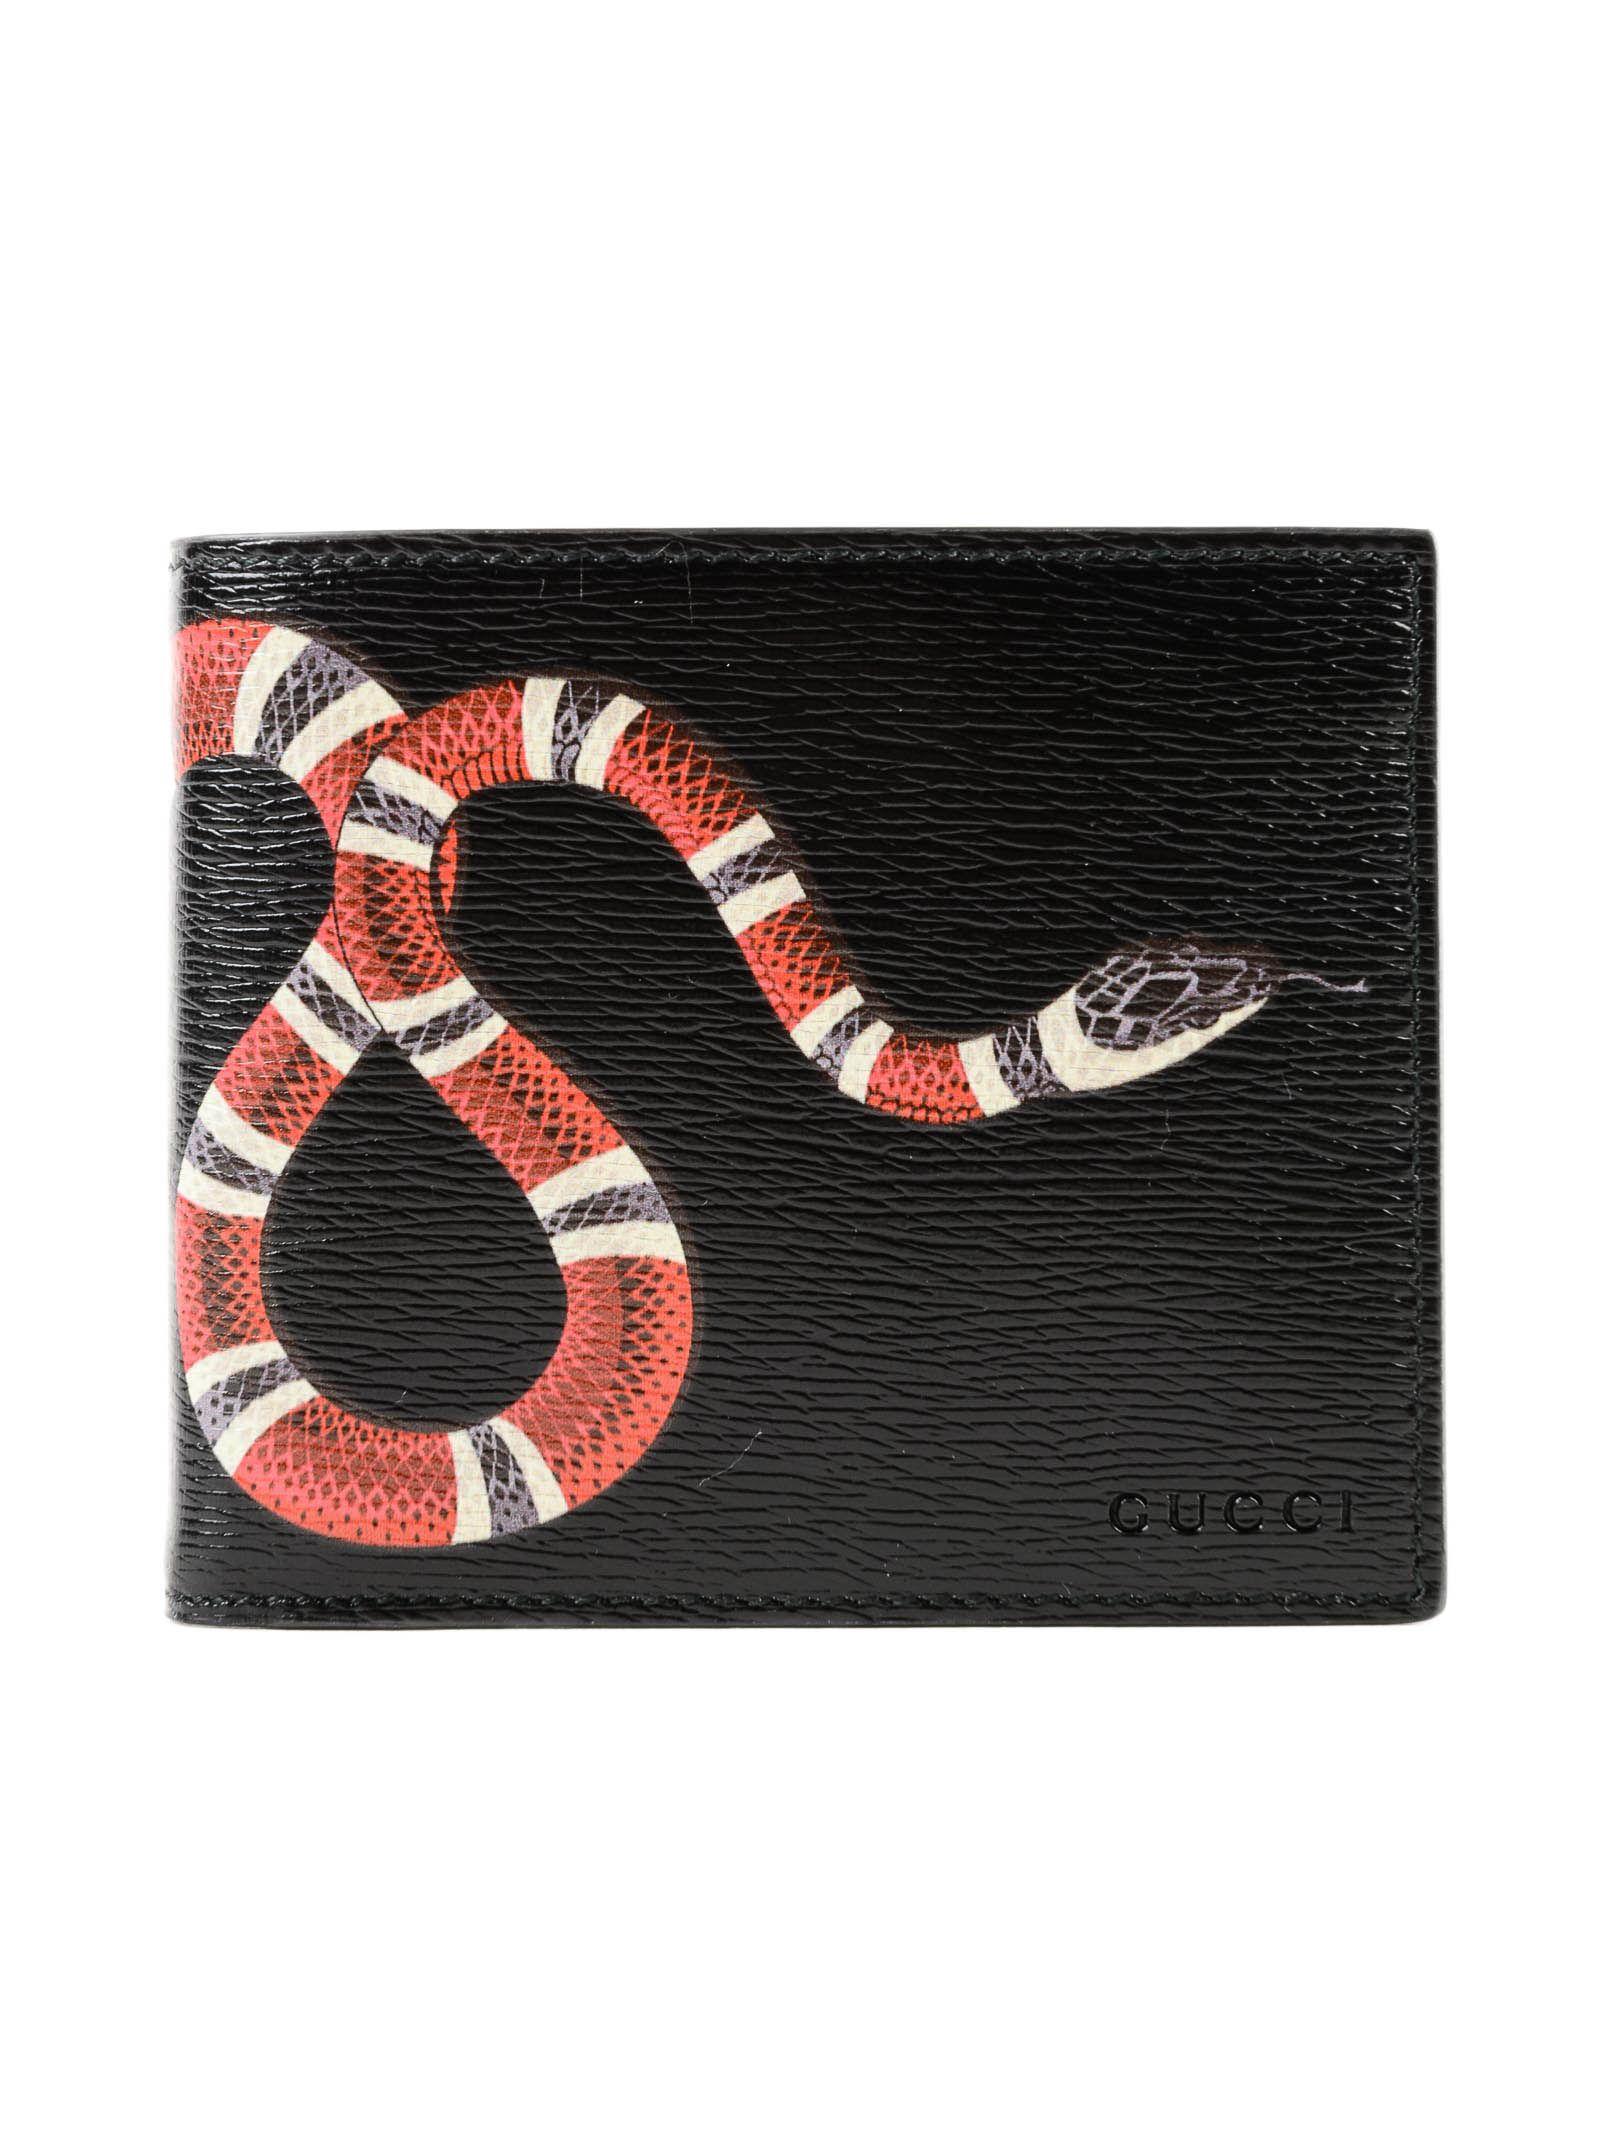 Coral Snake Gucci Logo - Gucci Shangai Calf Coral Snake Wallet 451268 DUR1T BLACK